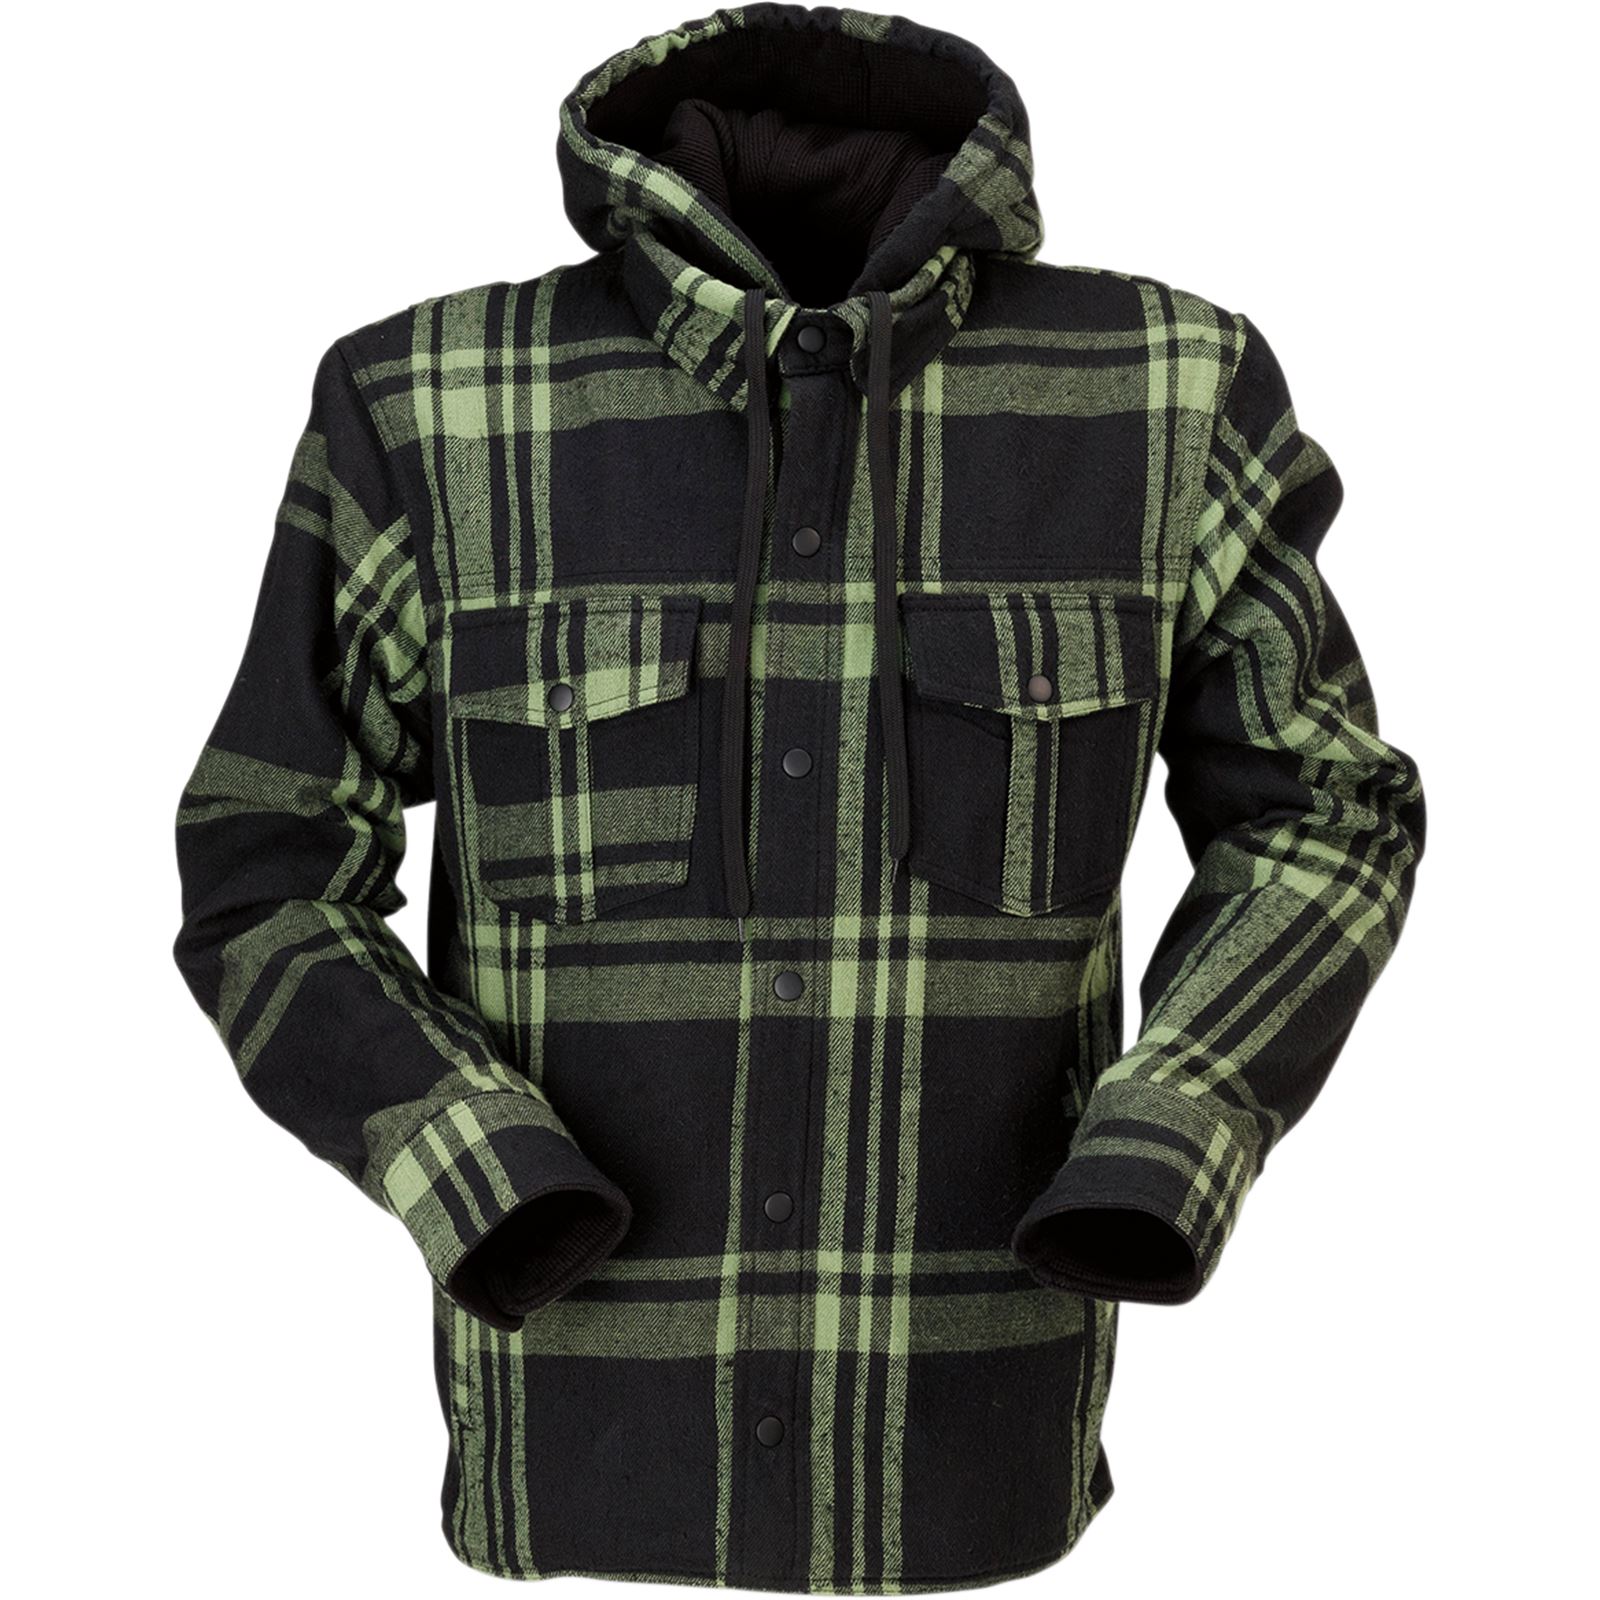 Z1R Timber Flannel Shirt - Olive/Black - Medium